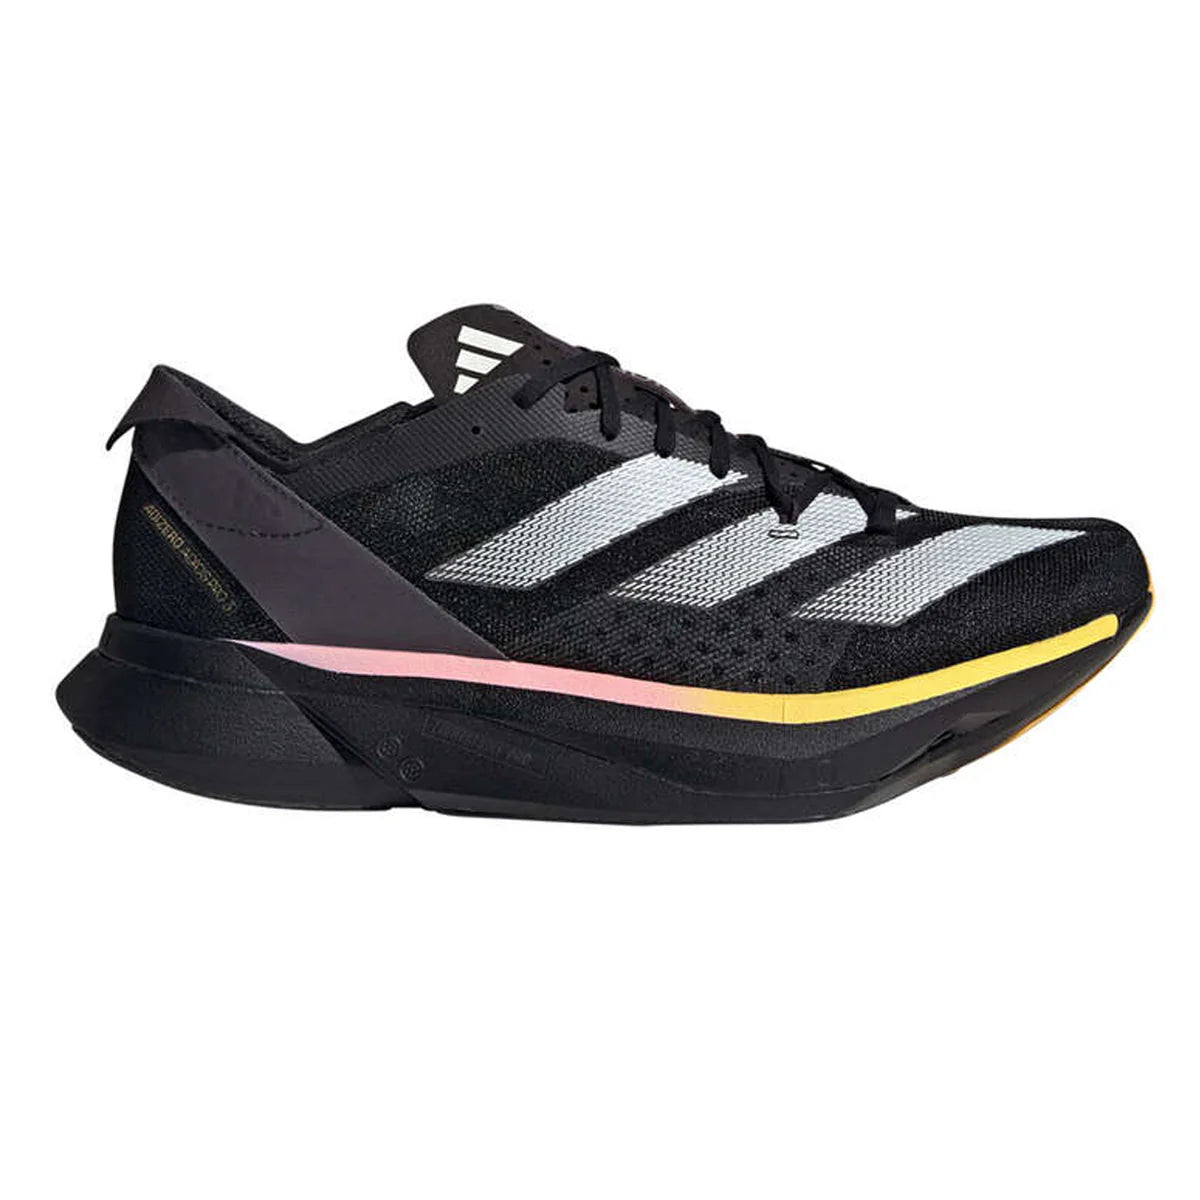 Adidas Adizero Adios Pro 3 Mens FOOTWEAR - Mens Carbon Plate CBLACK / ZEROMT / SPARK